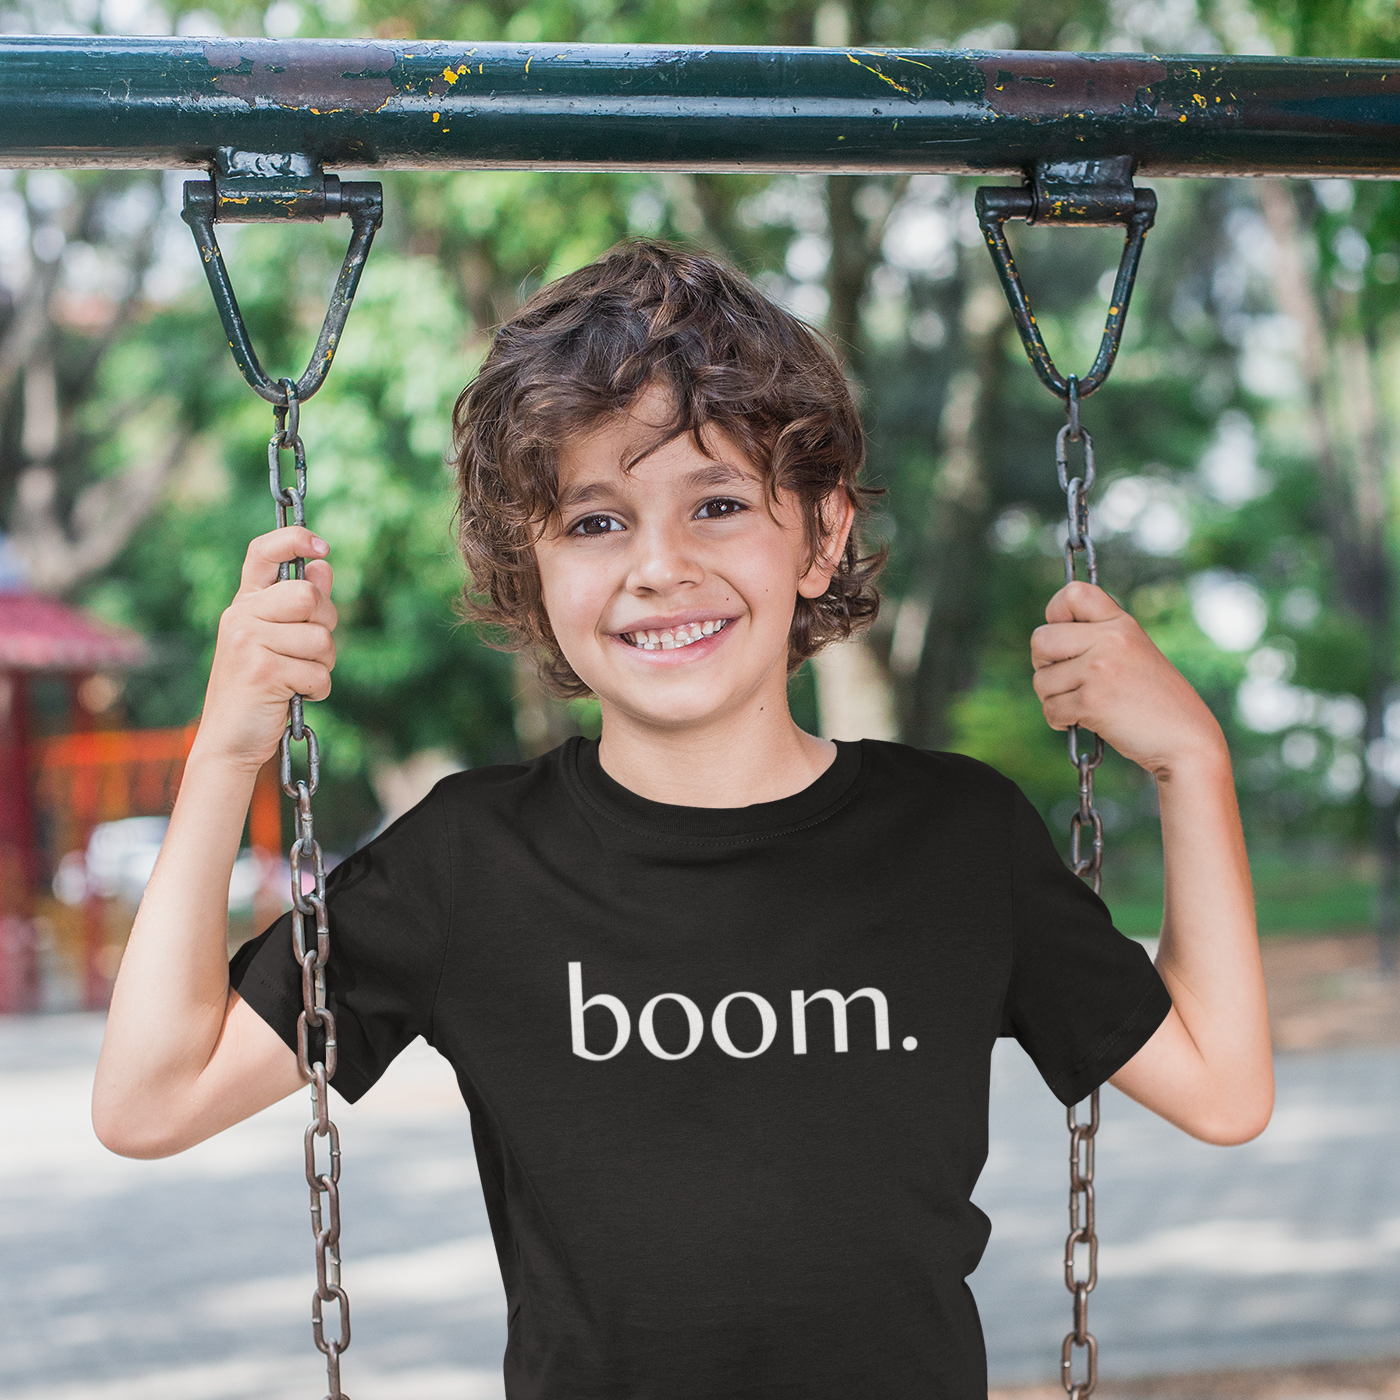 boom. - Kids Youth T-Shirt